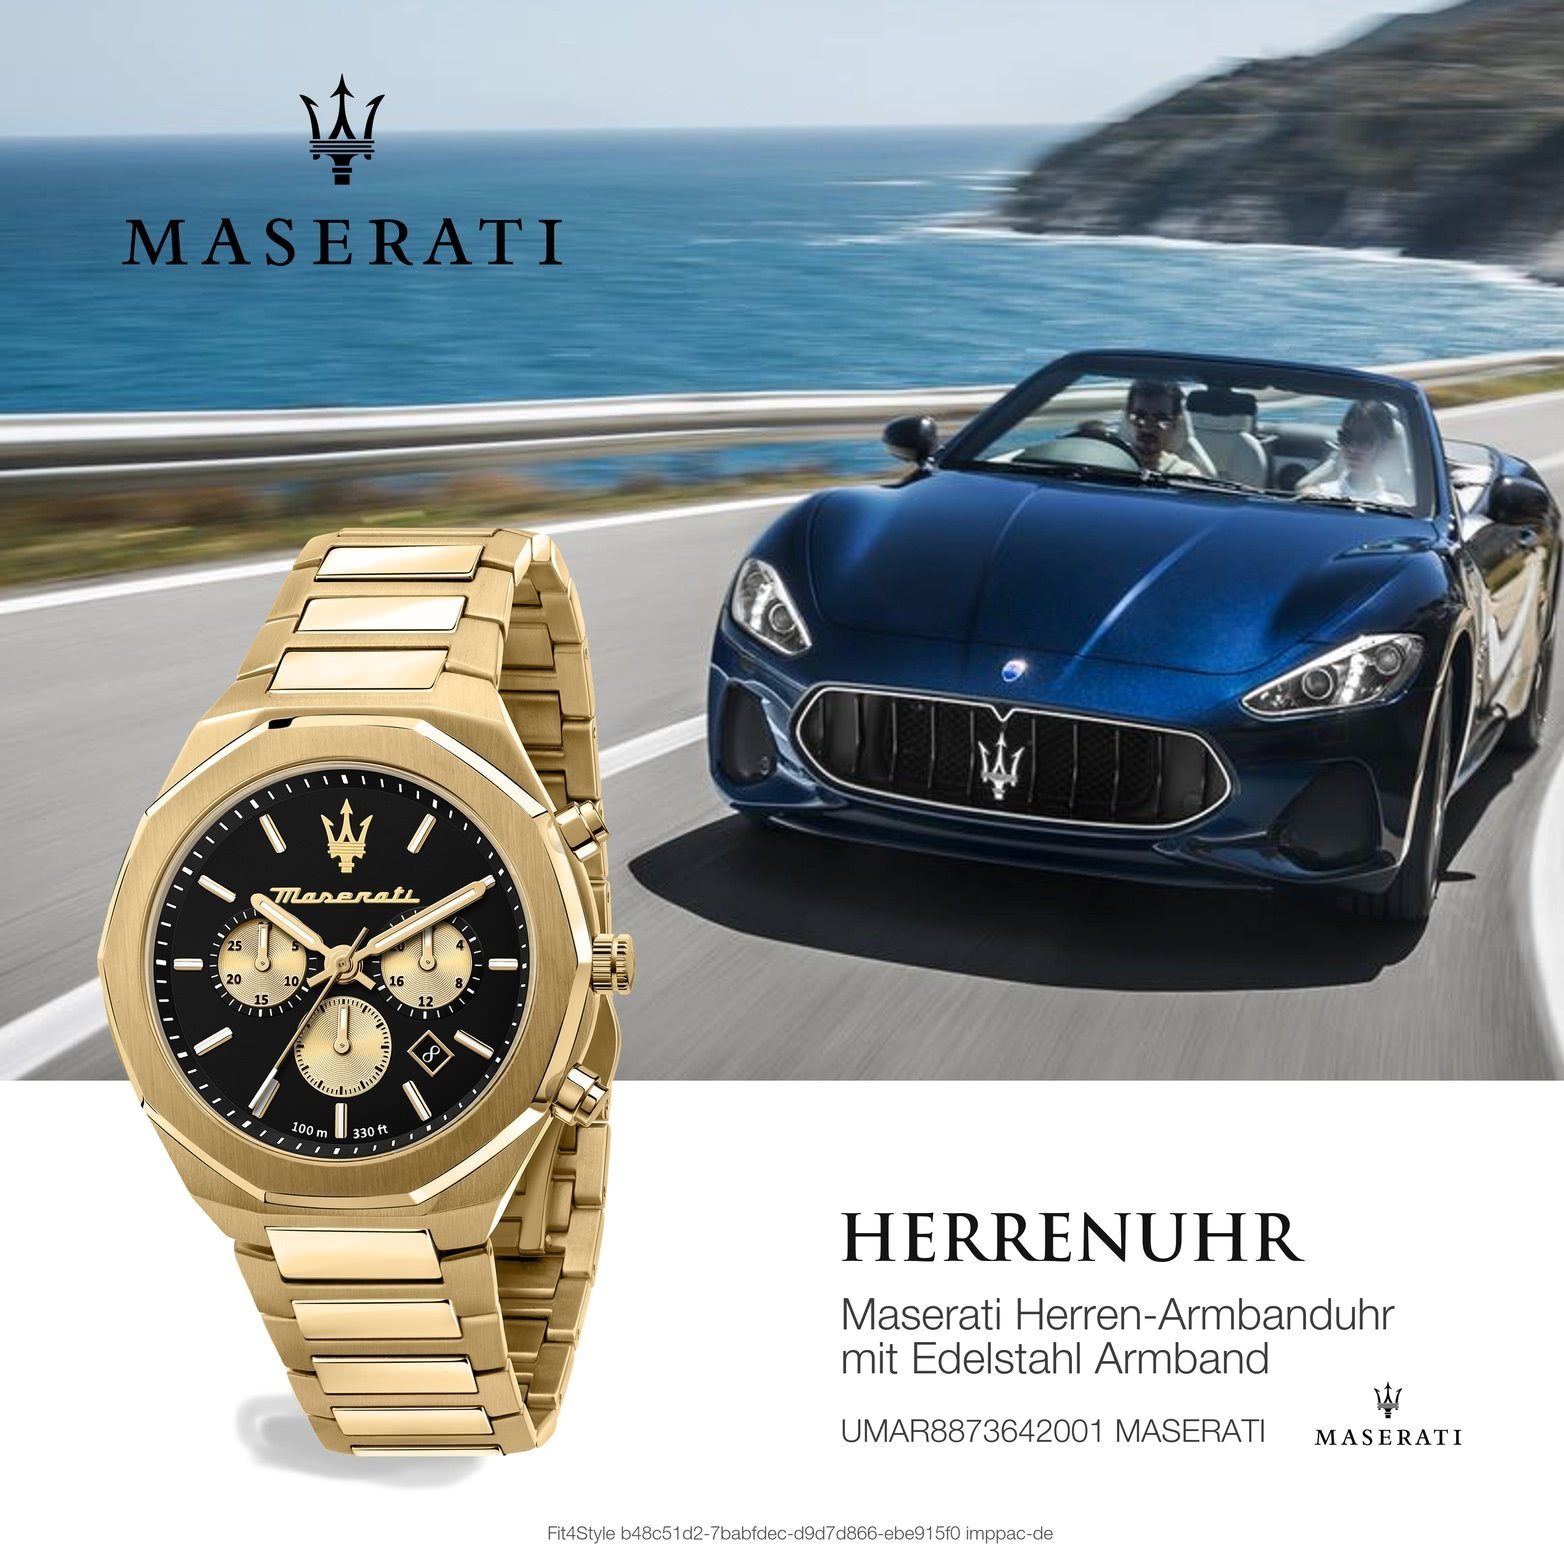 MASERATI blau groß Edelstahlarmband, Edelstahl (ca. Chronograph Armband-Uhr, Herrenuhr 45mm) Maserati Gehäuse, rundes